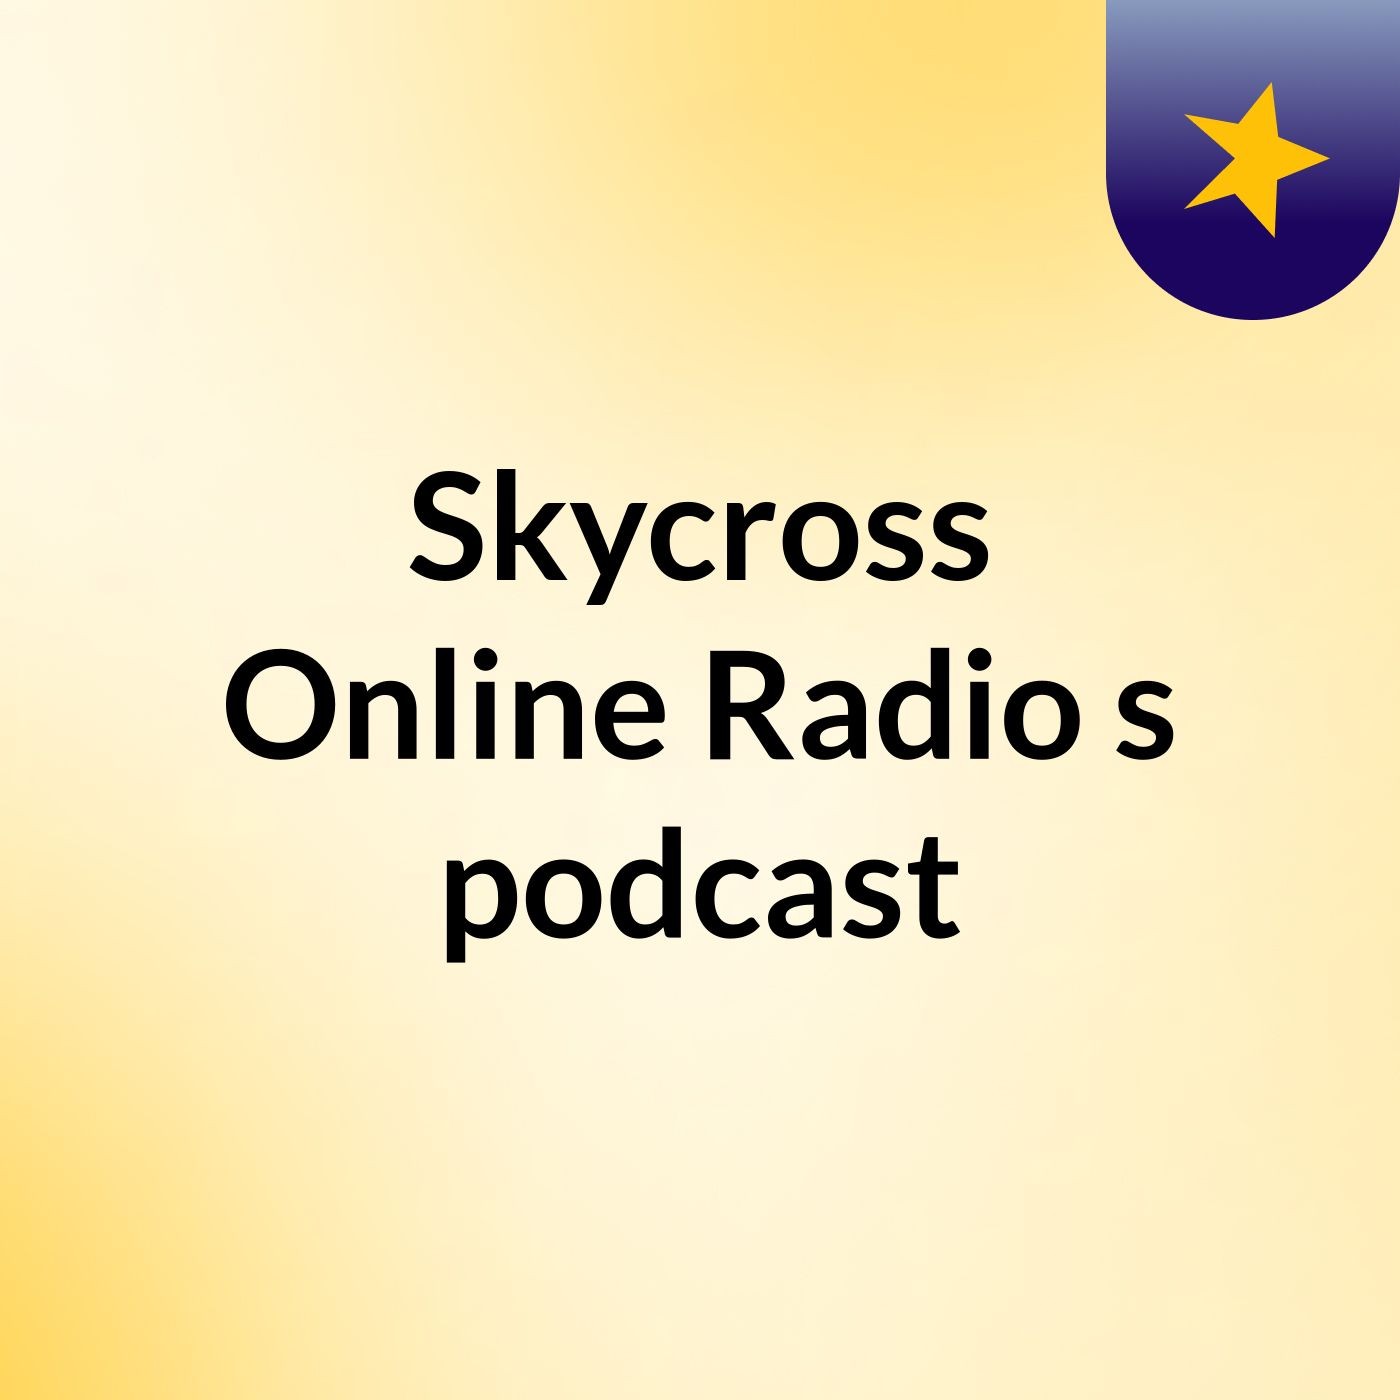 Episode 6 - Skycross Online Radio's podcast